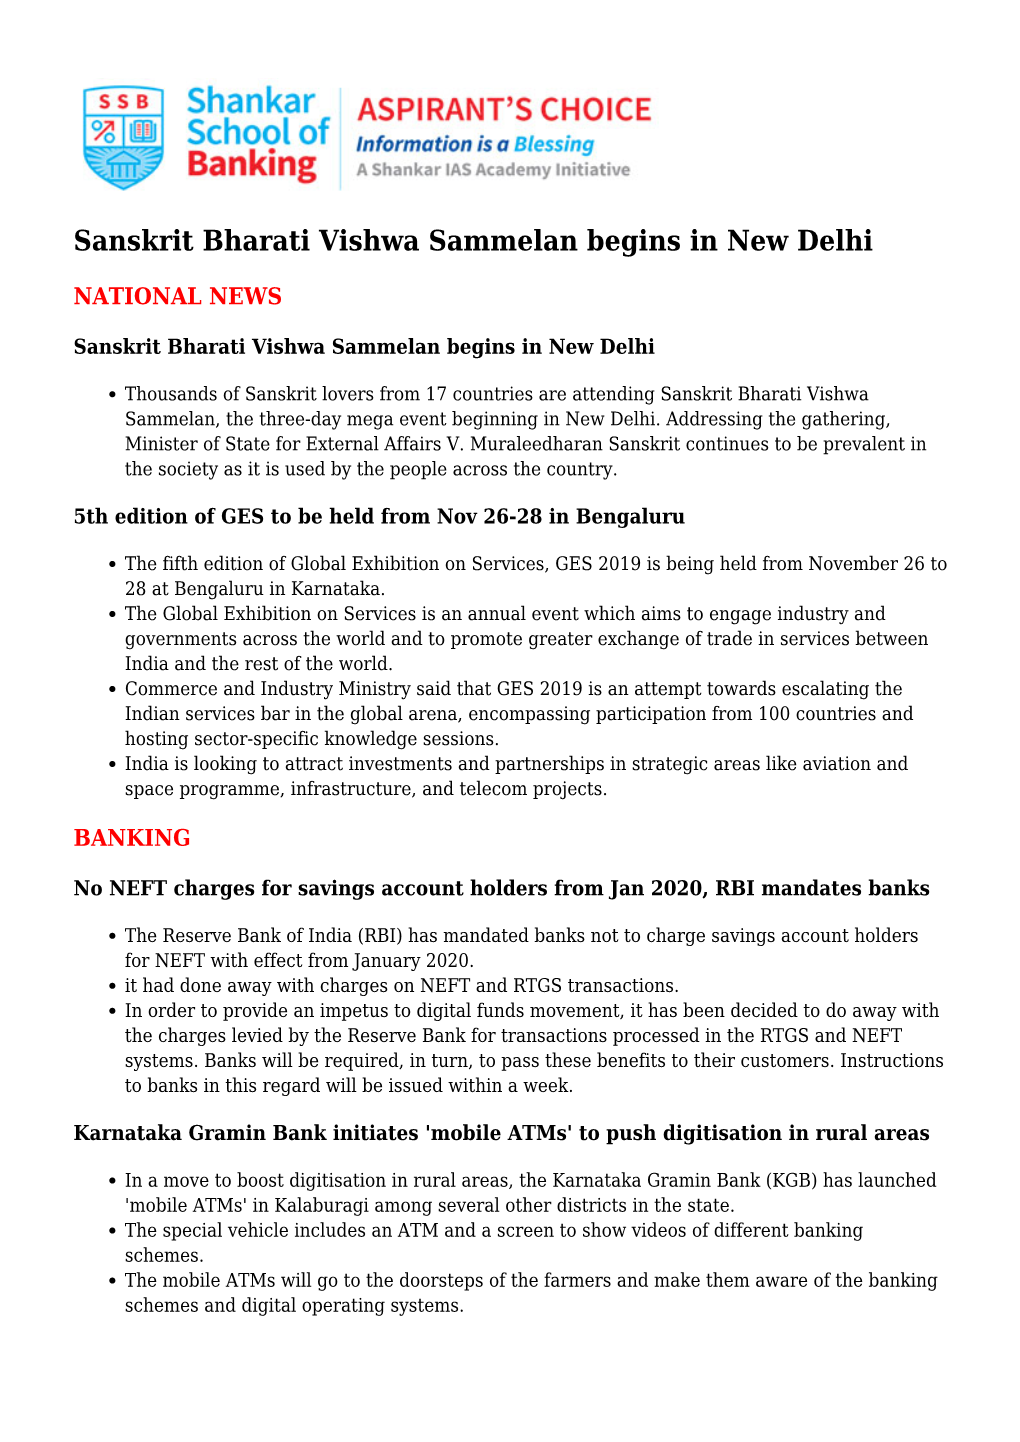 Sanskrit Bharati Vishwa Sammelan Begins in New Delhi